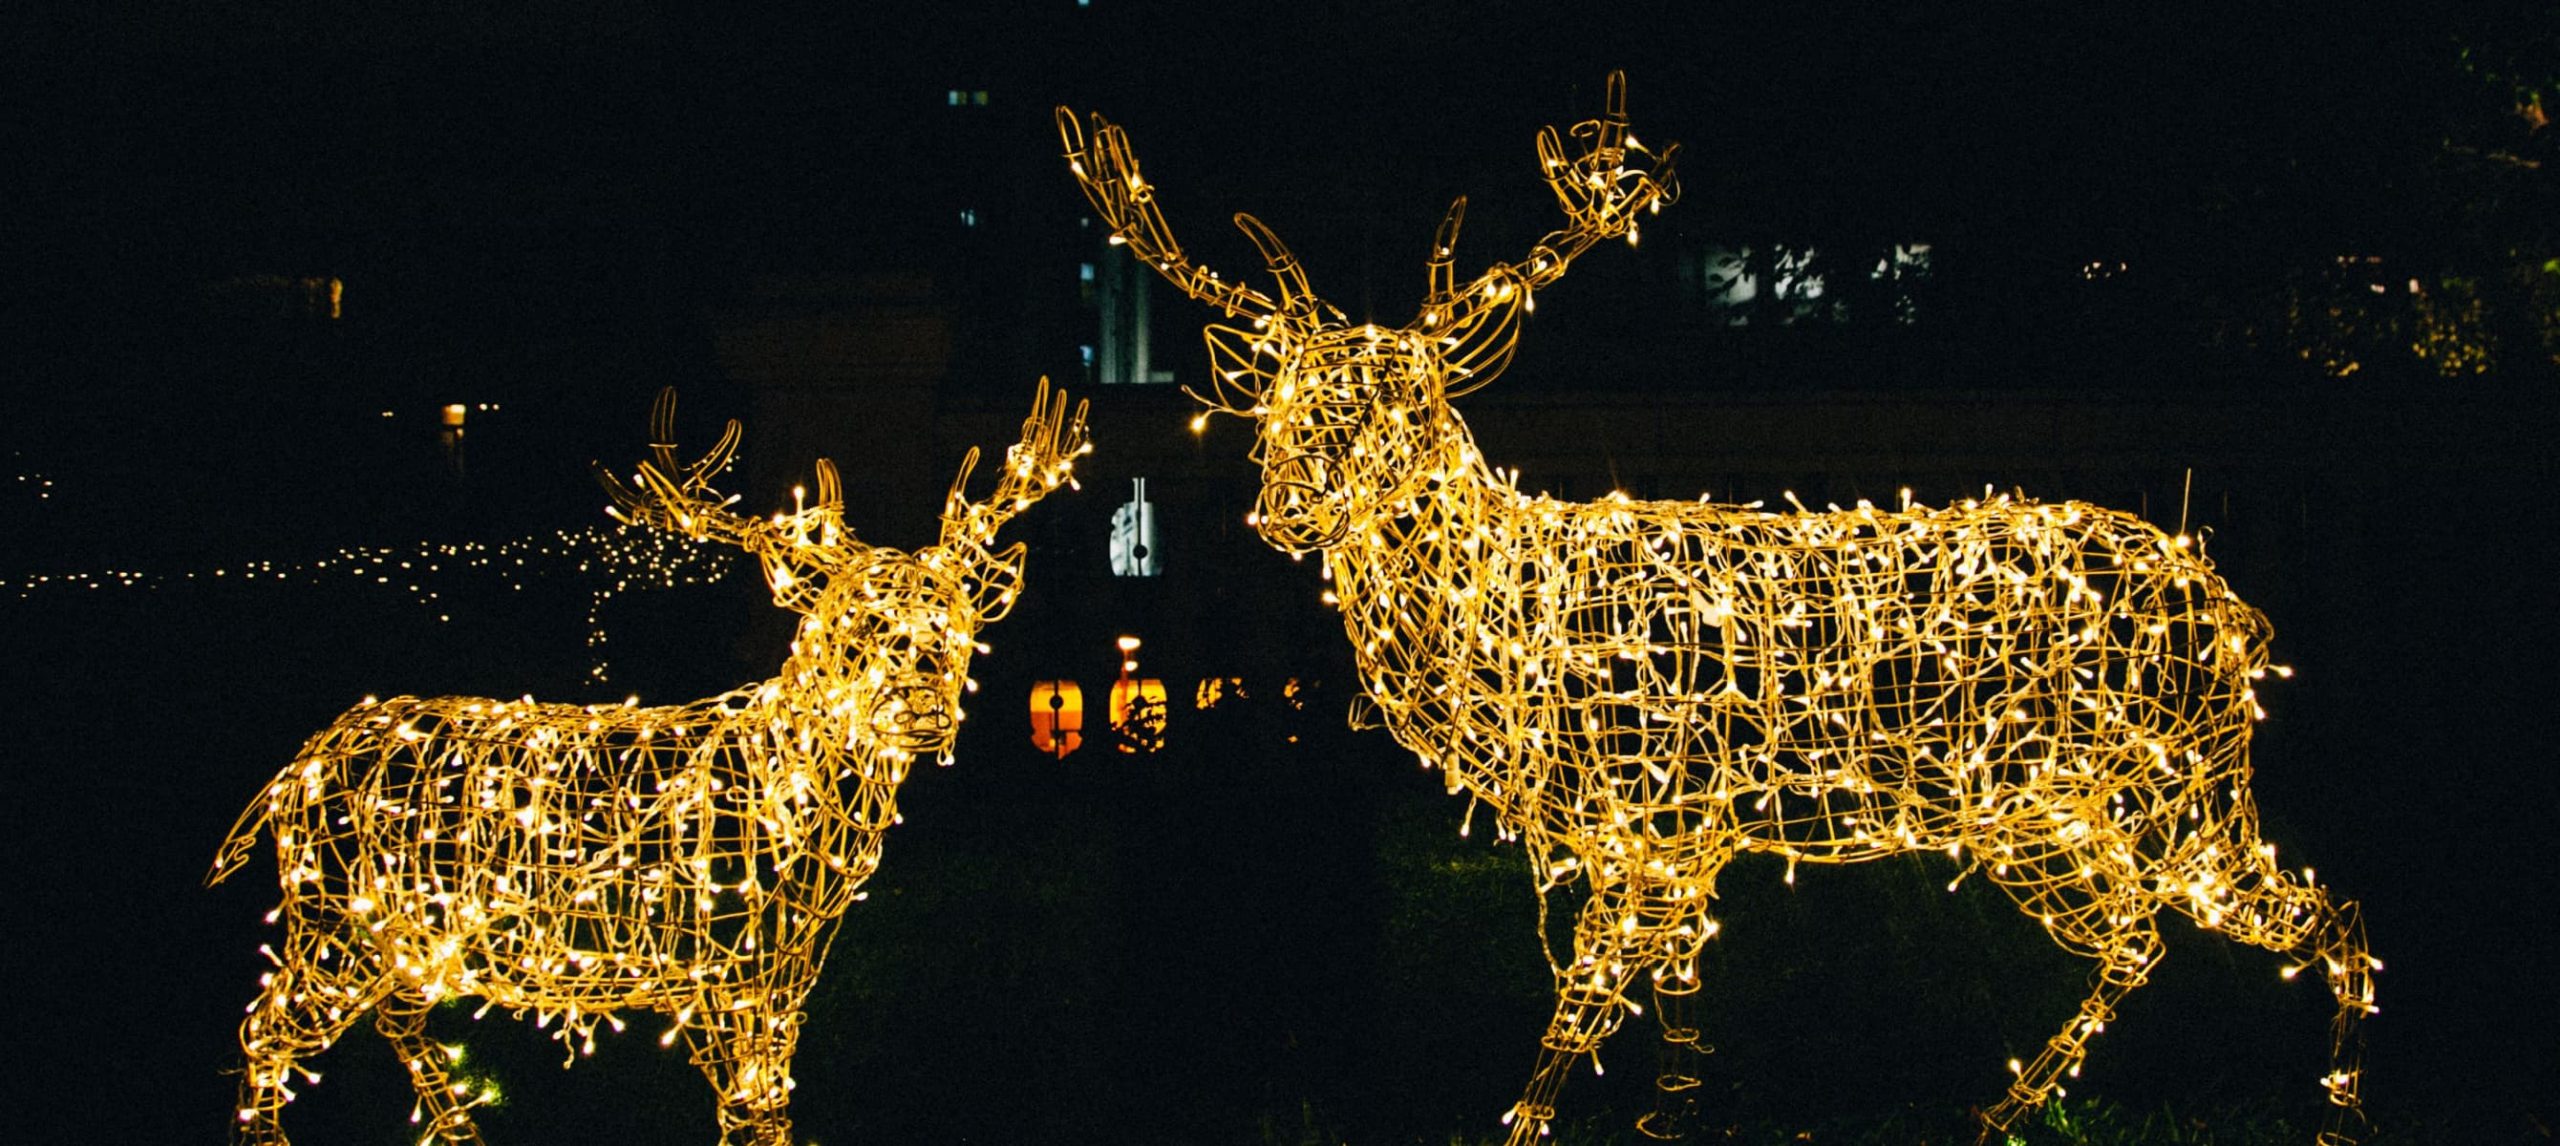 Reindeer Christmas lights